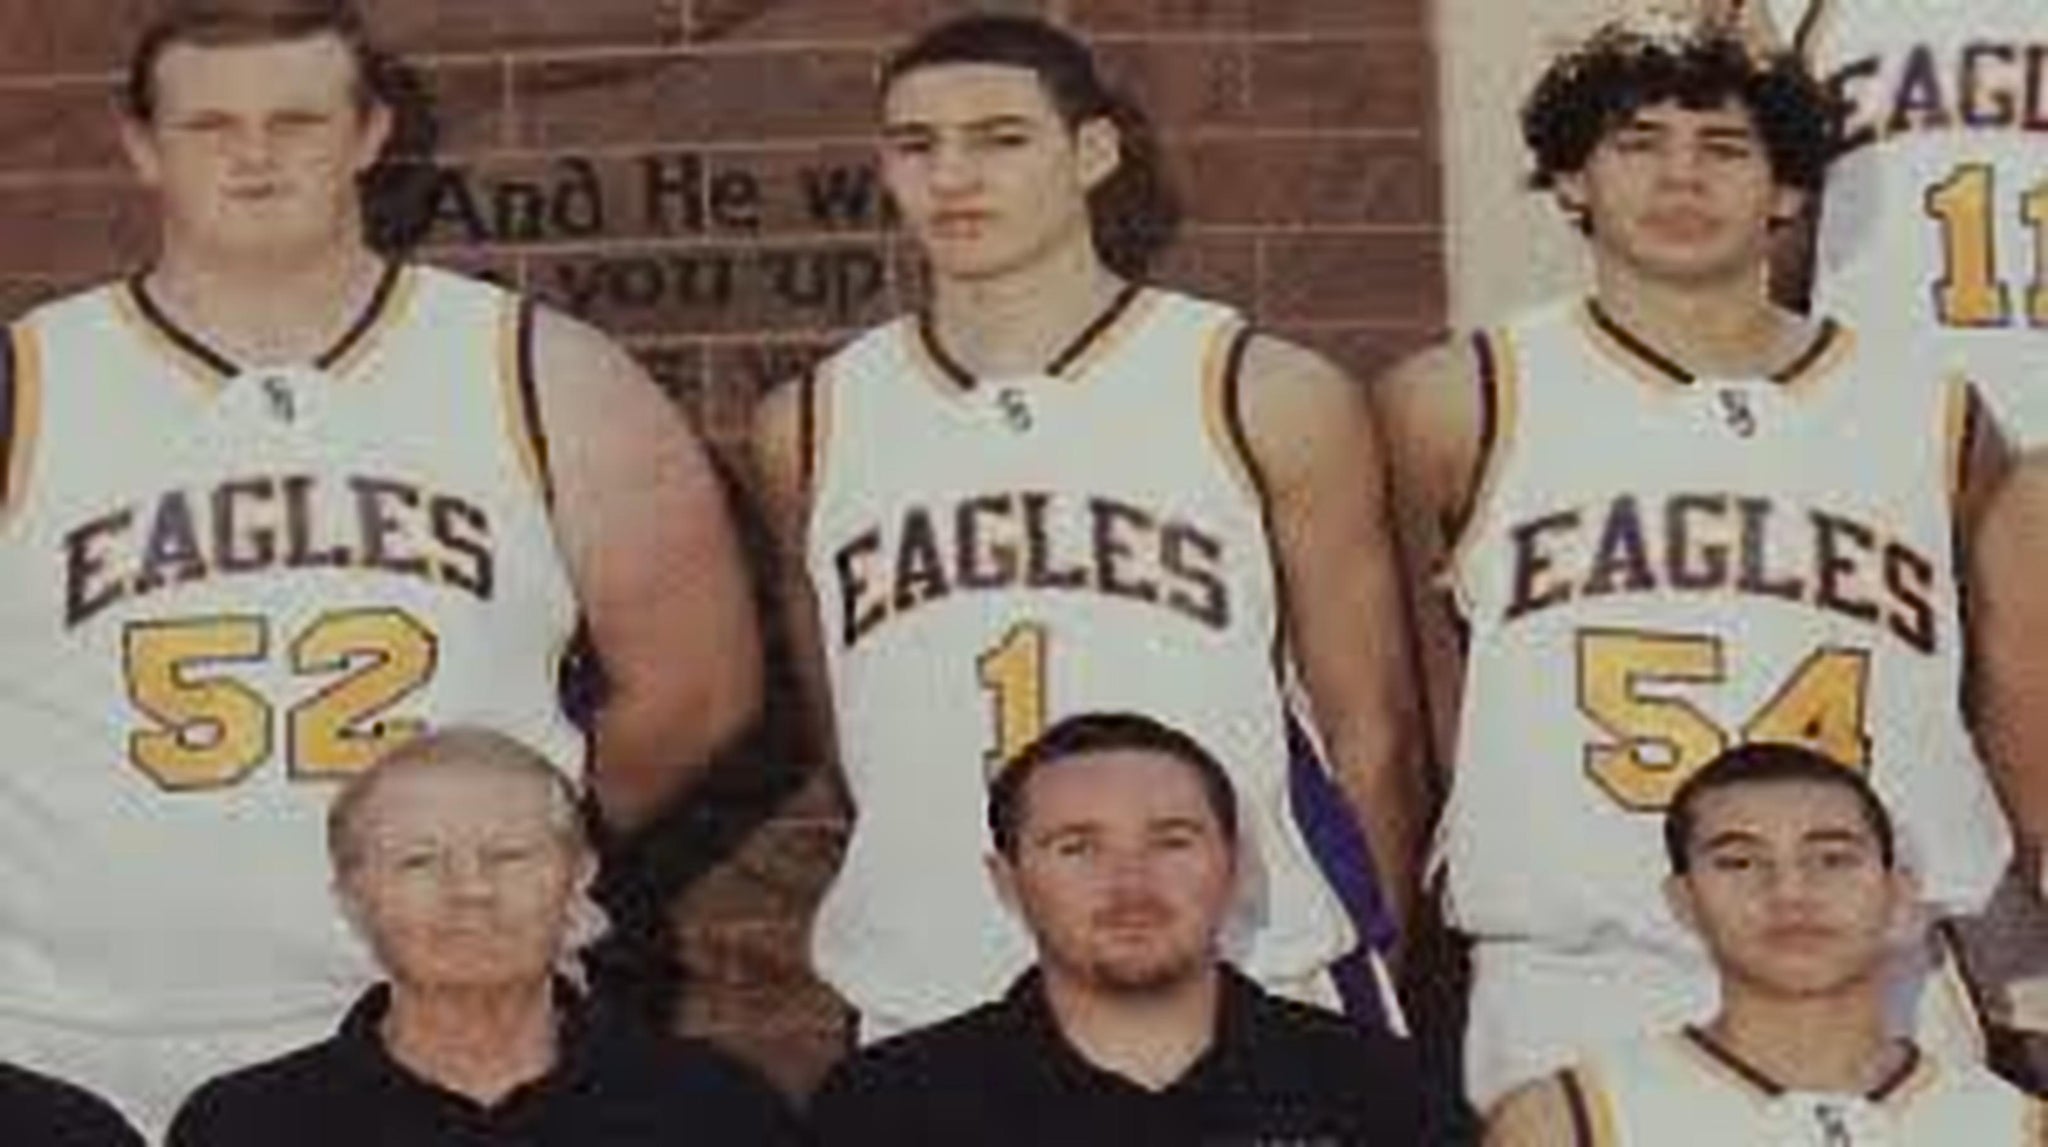 JordansSecretStuff Klay Thompson Eagles High School Basketball Jersey (Away) Custom Throwback Retro Jersey XL